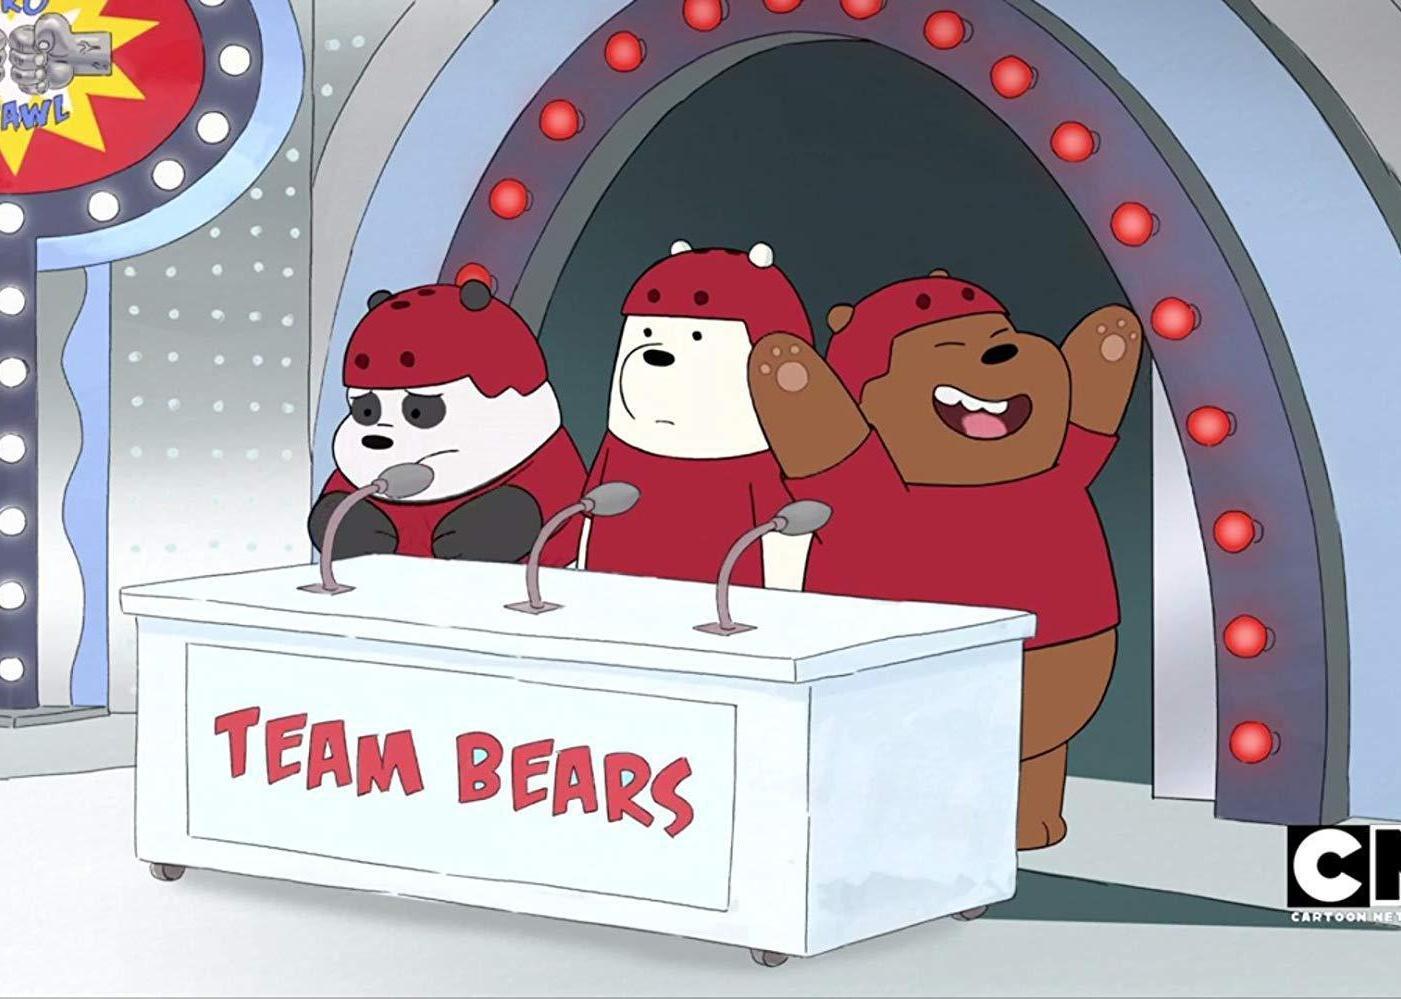 Actors in an episode of ‘We Bare Bears’.